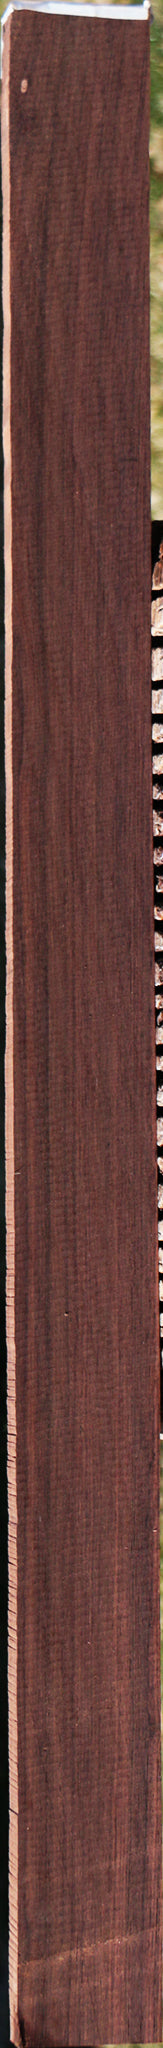 Madagascar Rosewood Lumber